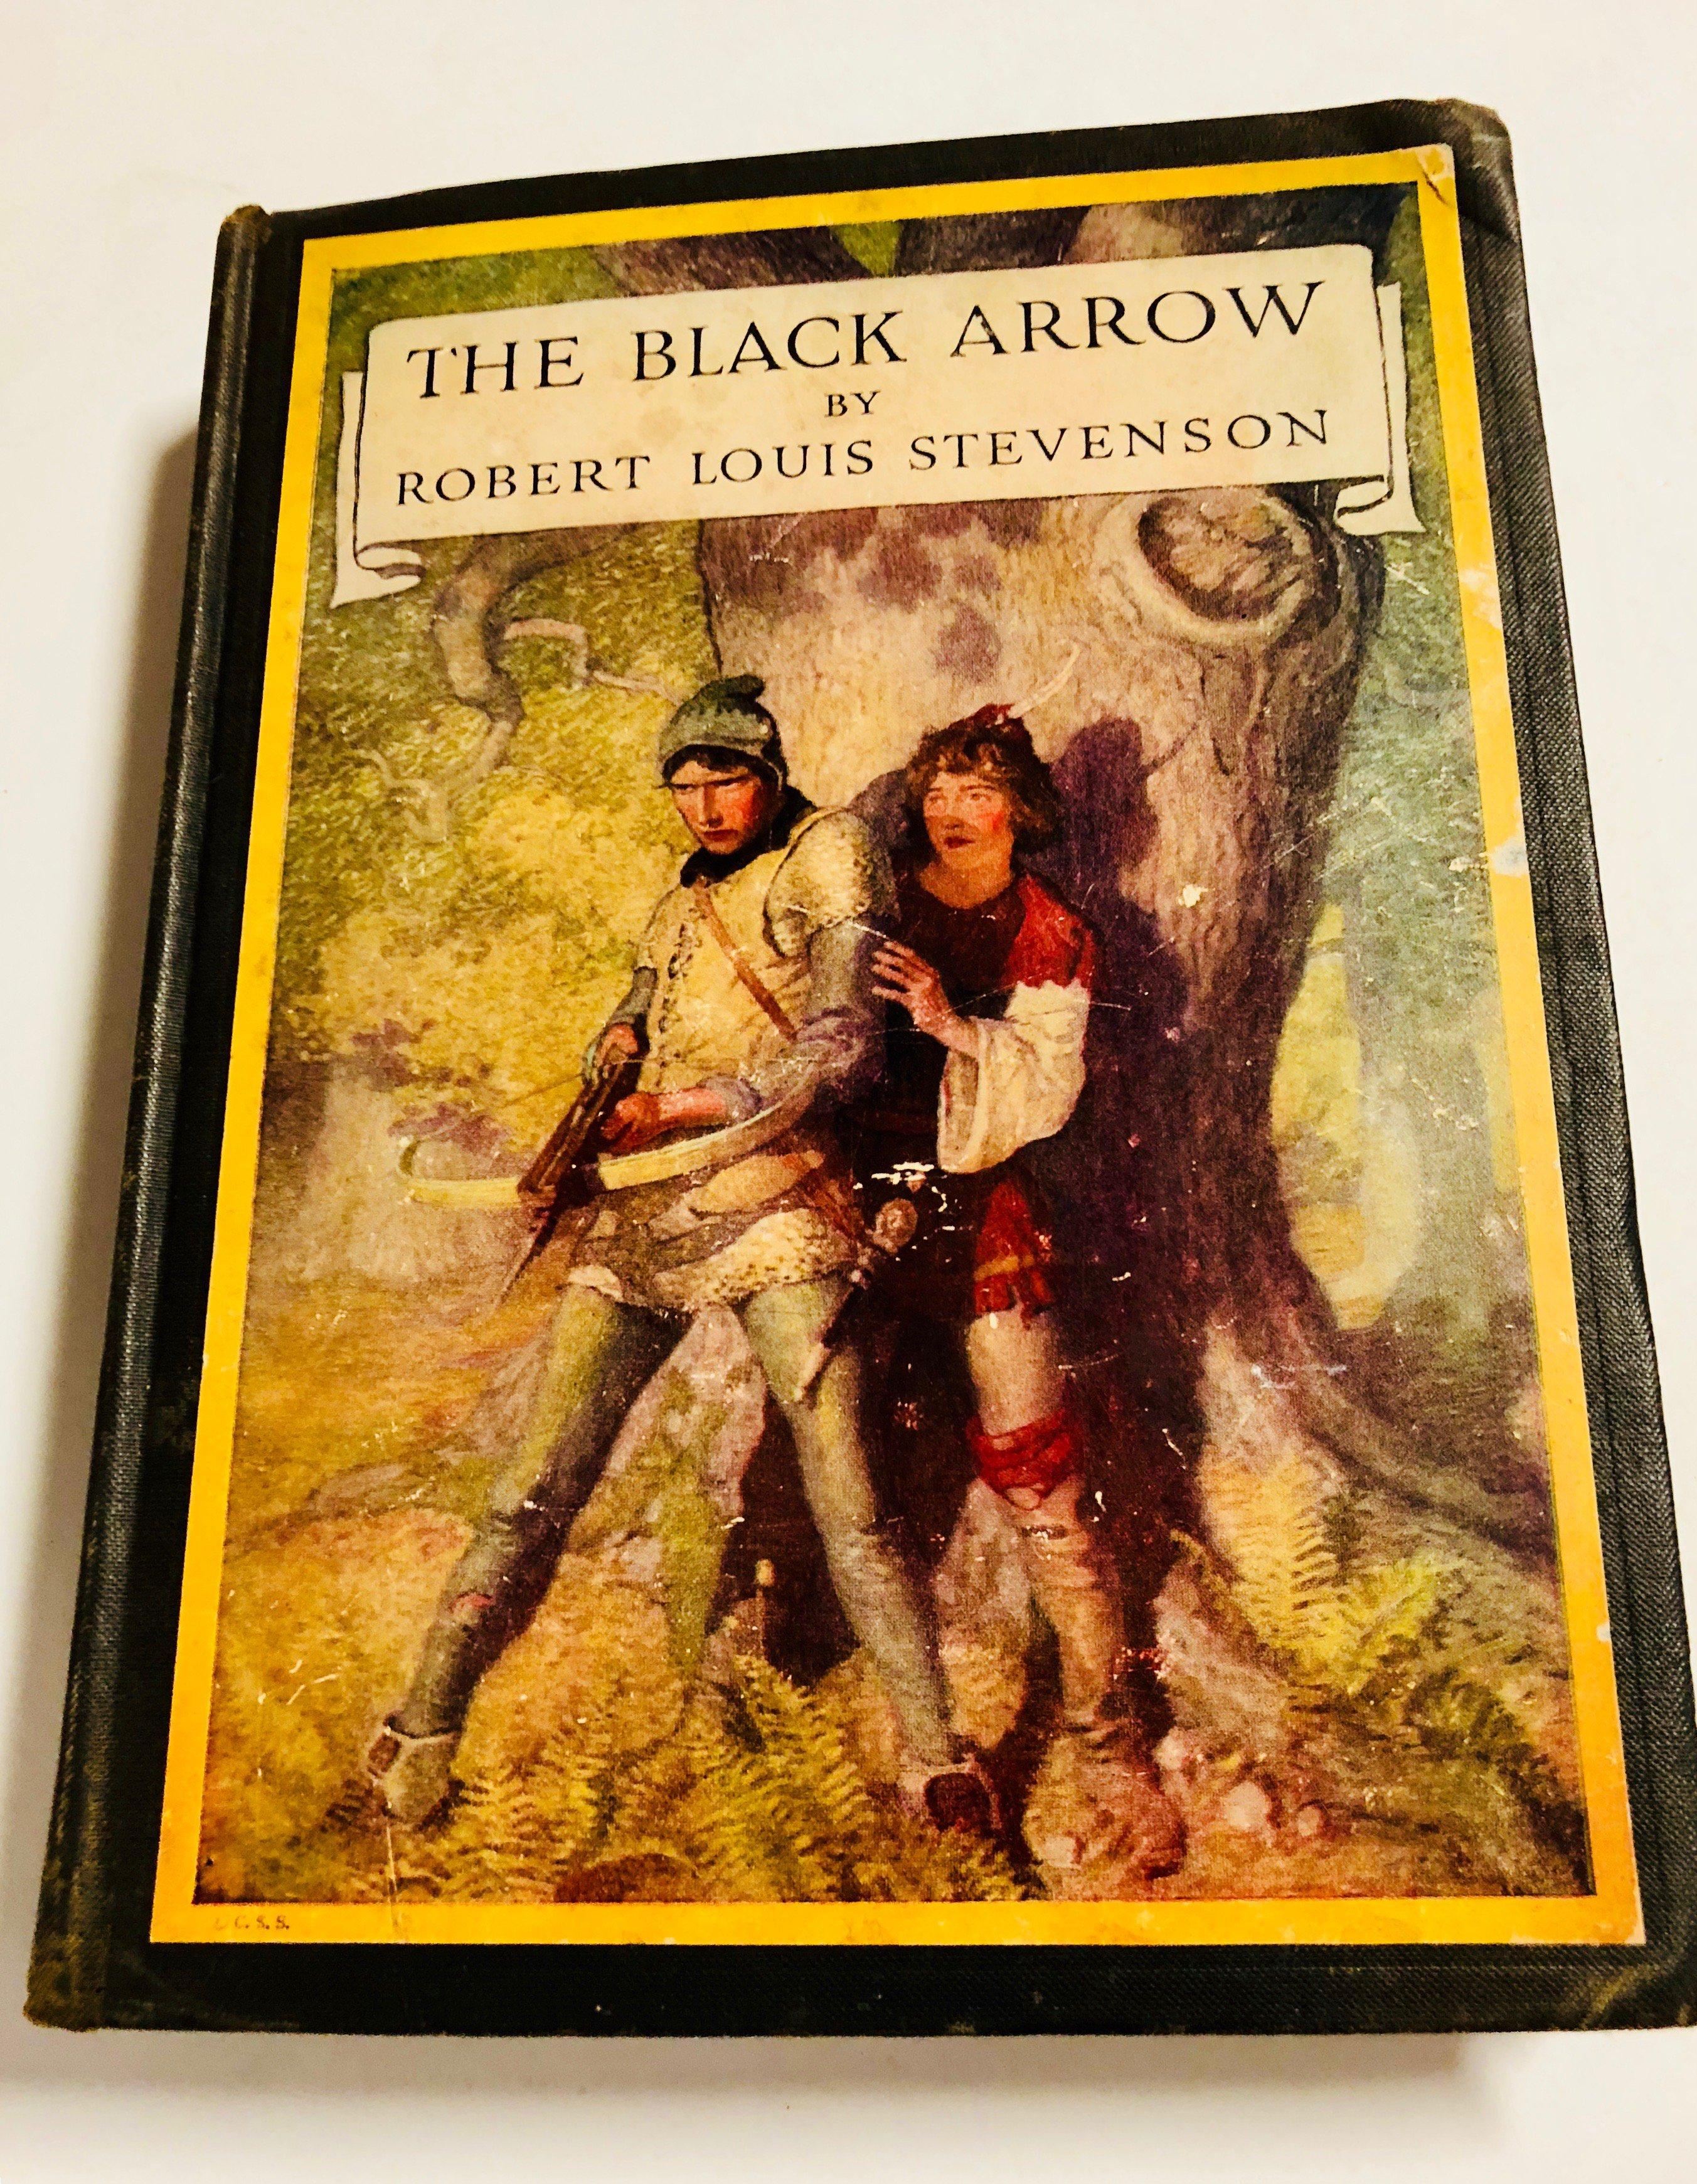 The Black Arrow by Robert Louis Stevenson (1916) Illustrations by N.C. Wyeth